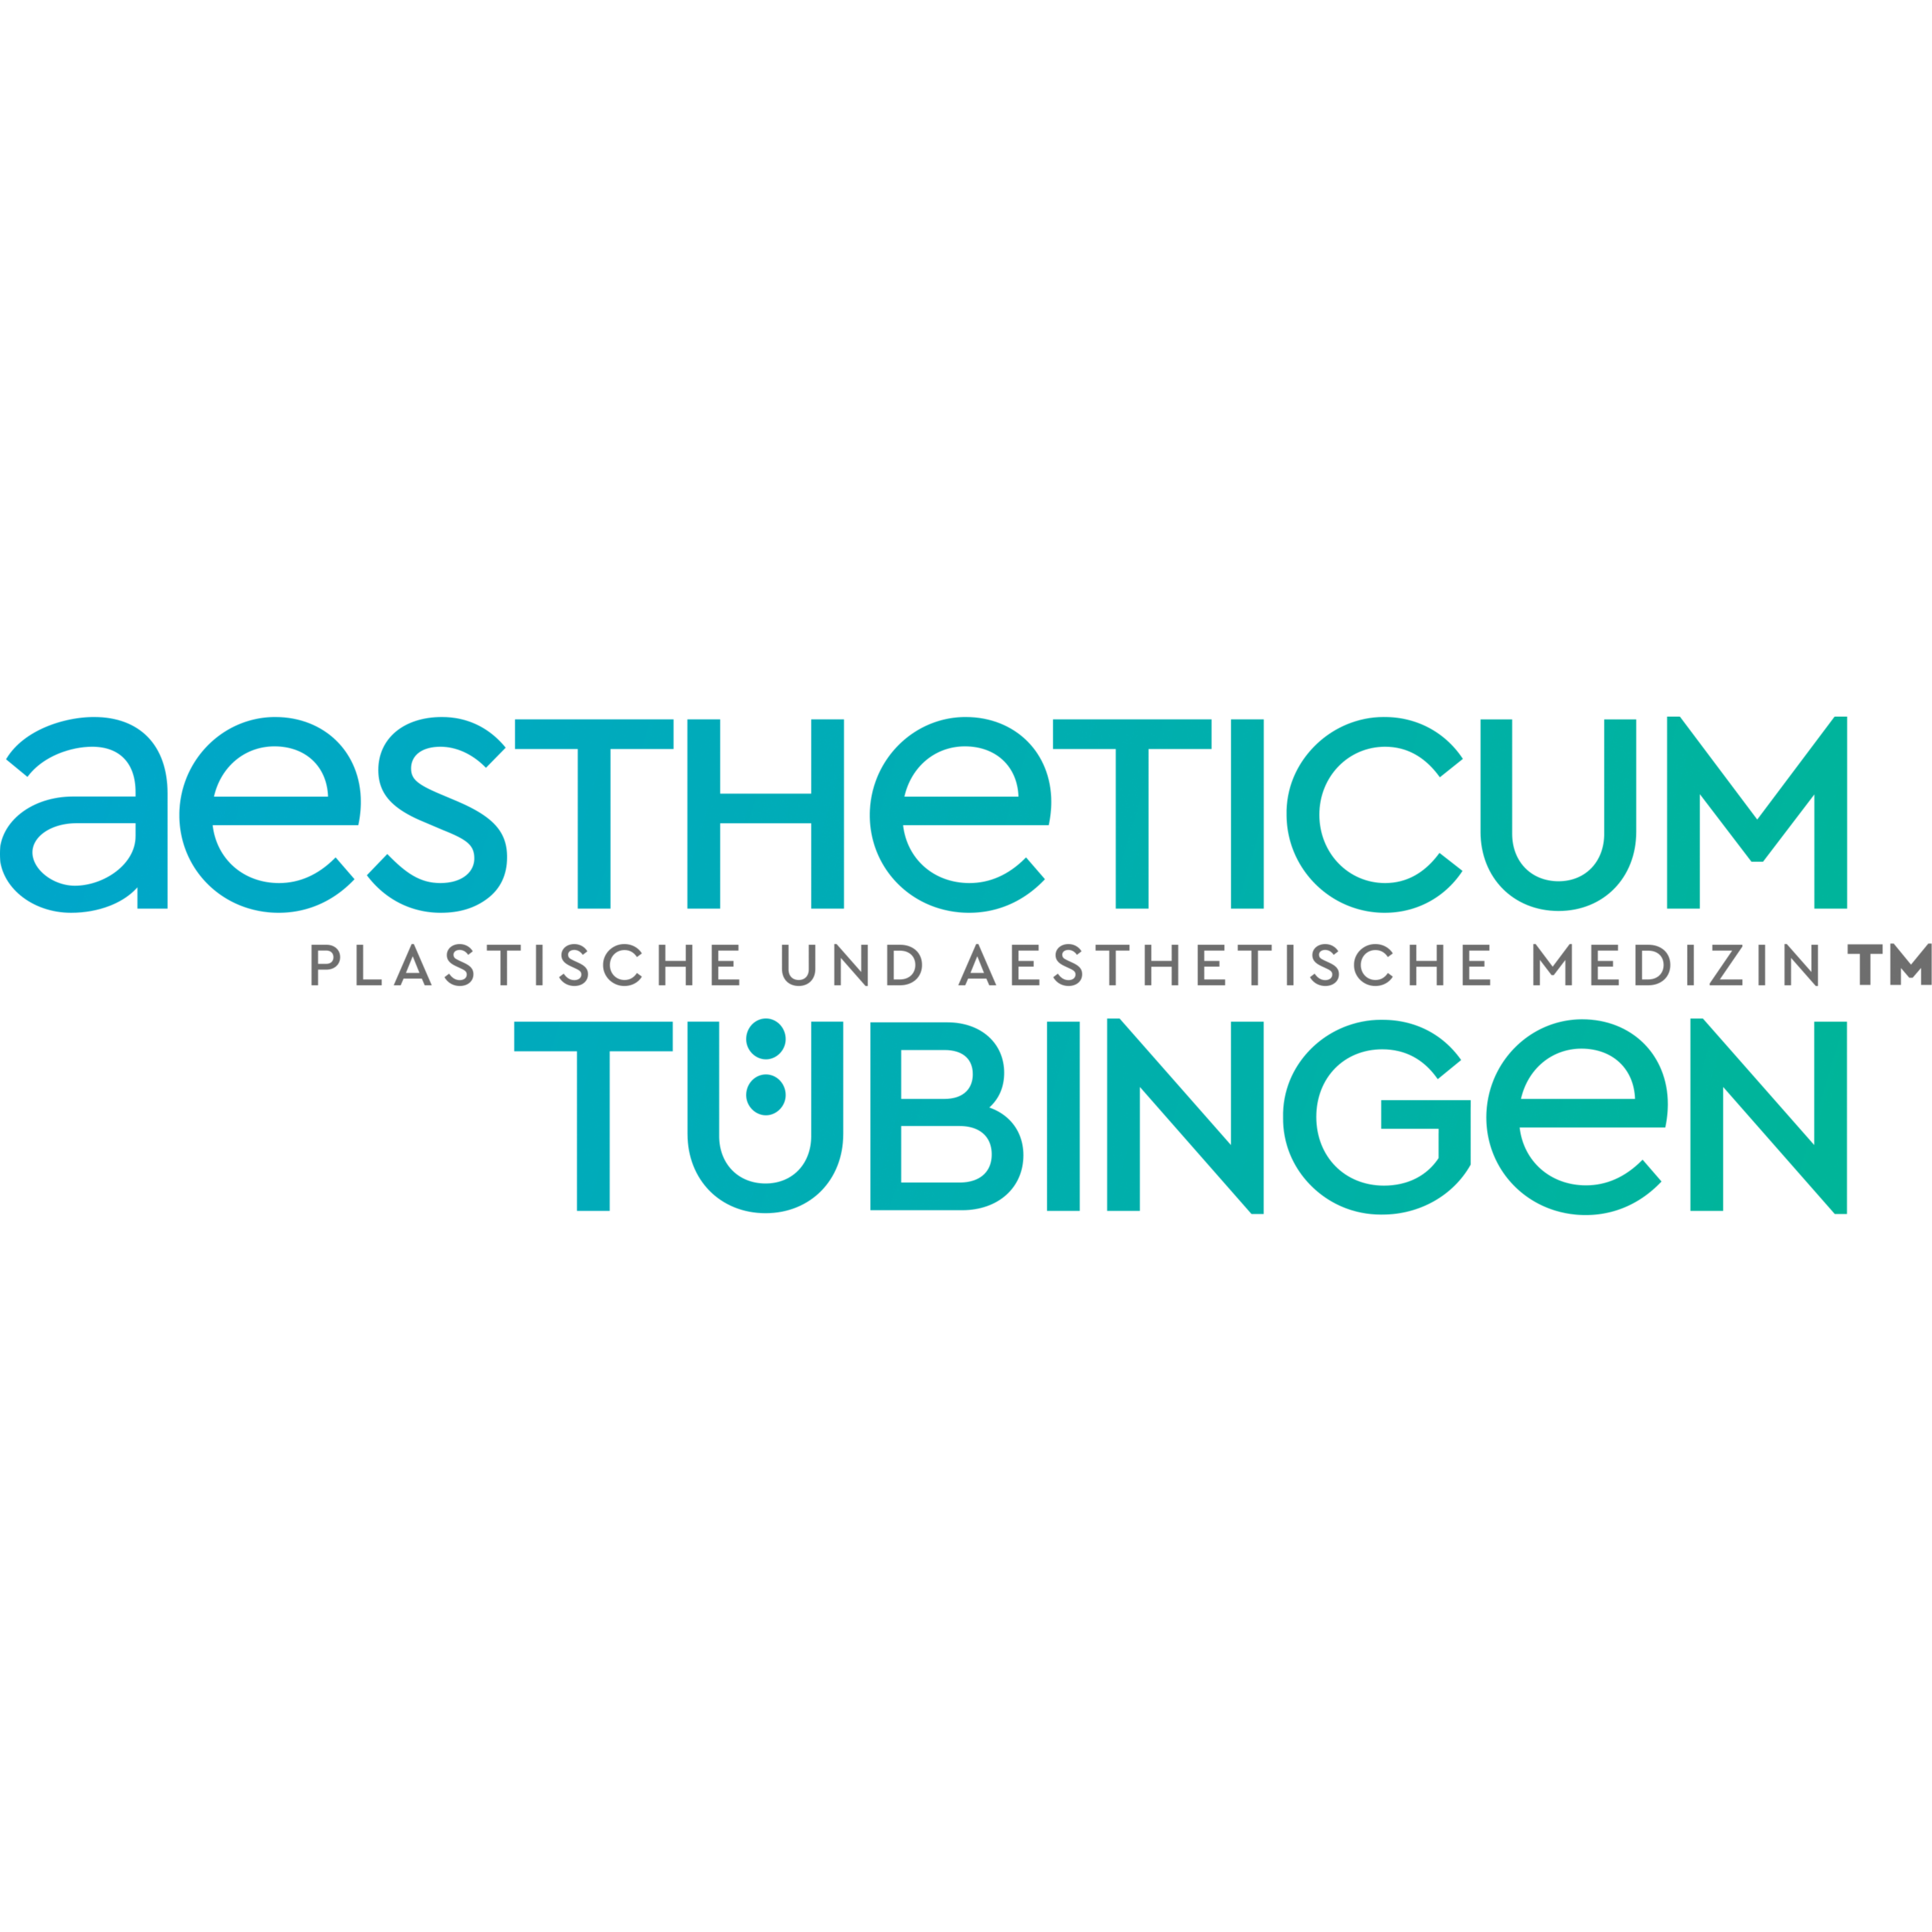 Aestheticum Tübingen - Privatklinik für Plastische & Ästhetische Medizin Dr. med. Philipp Braun & PD Dr. med. Oliver Lotter in Tübingen - Logo